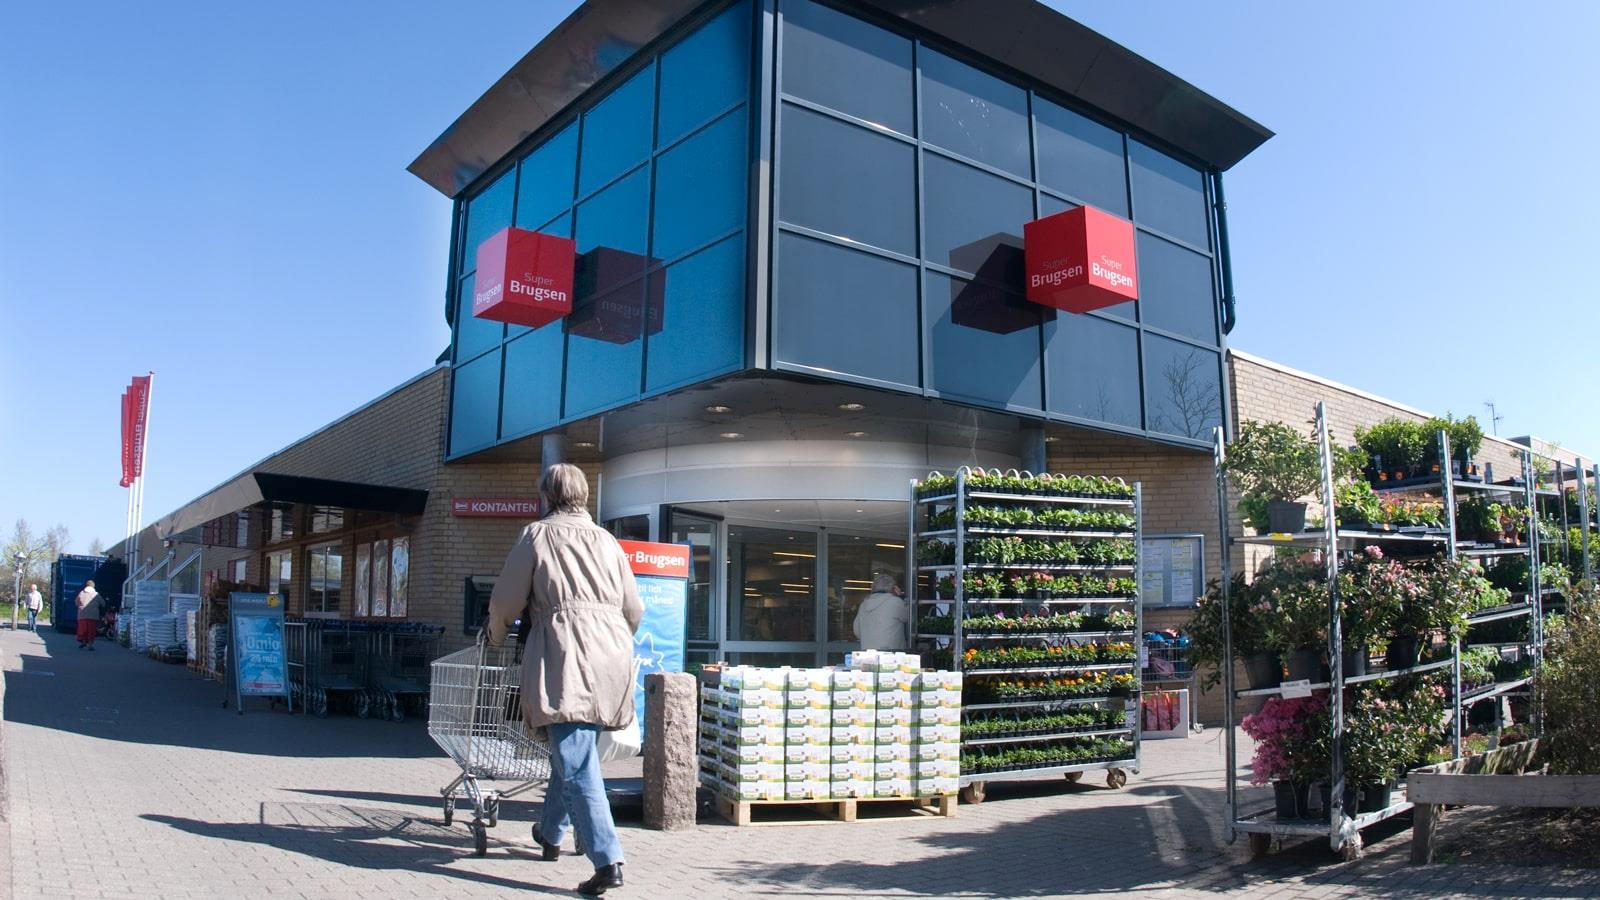 Woman pushes shopping cart towards entrance of supermarket SuperBrugsen